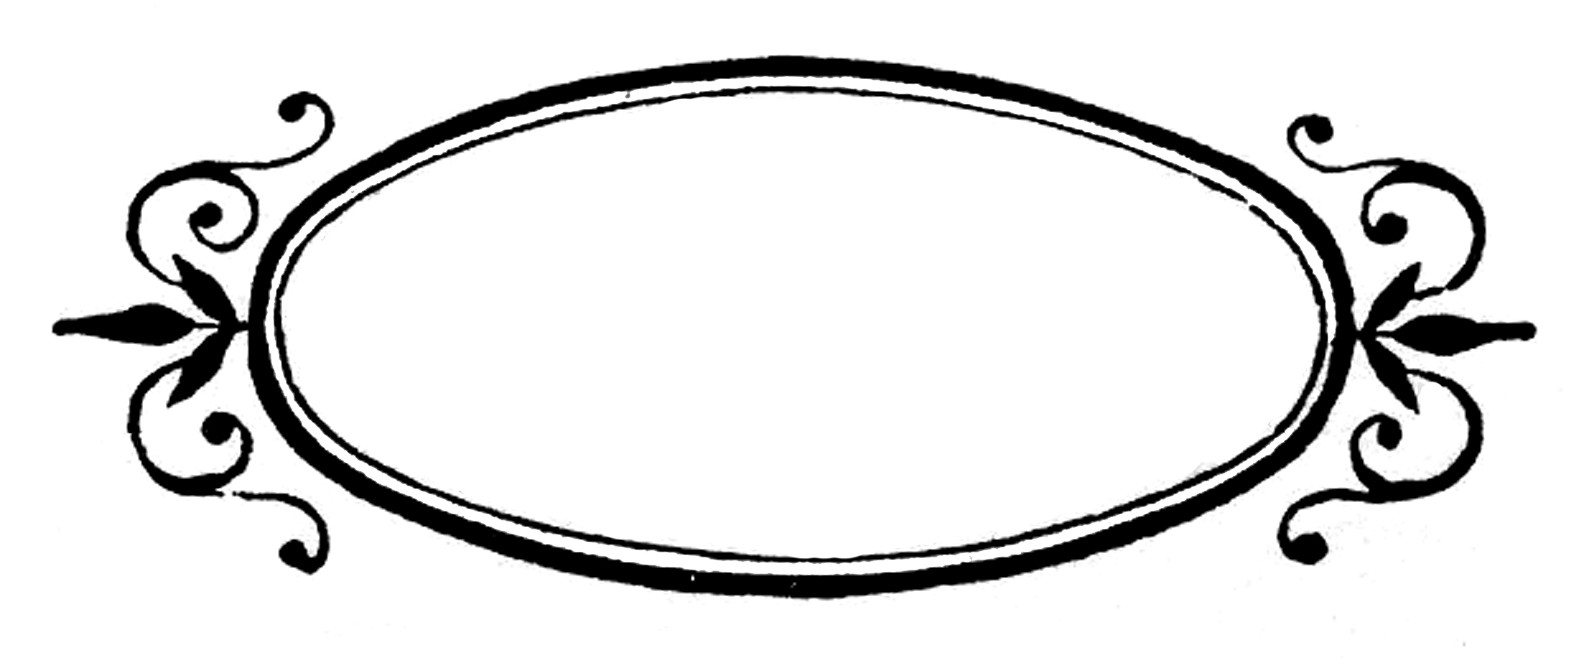 Oval shape clip art